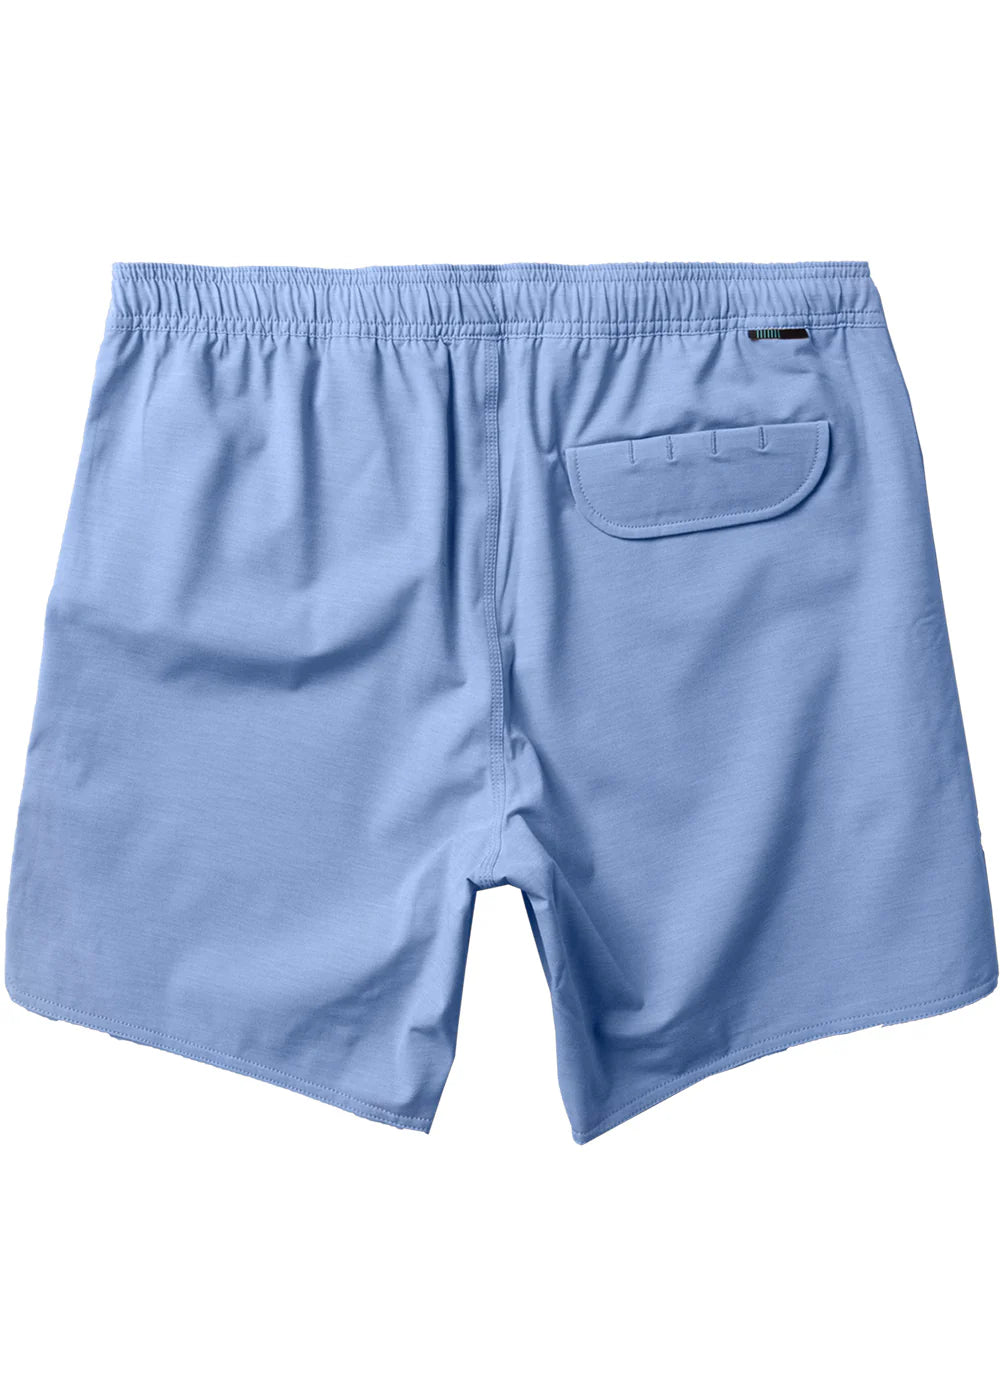 Vissla Ecolastic 16.5" Breakers Board Shorts- Harbor Blue Mens Boardshorts